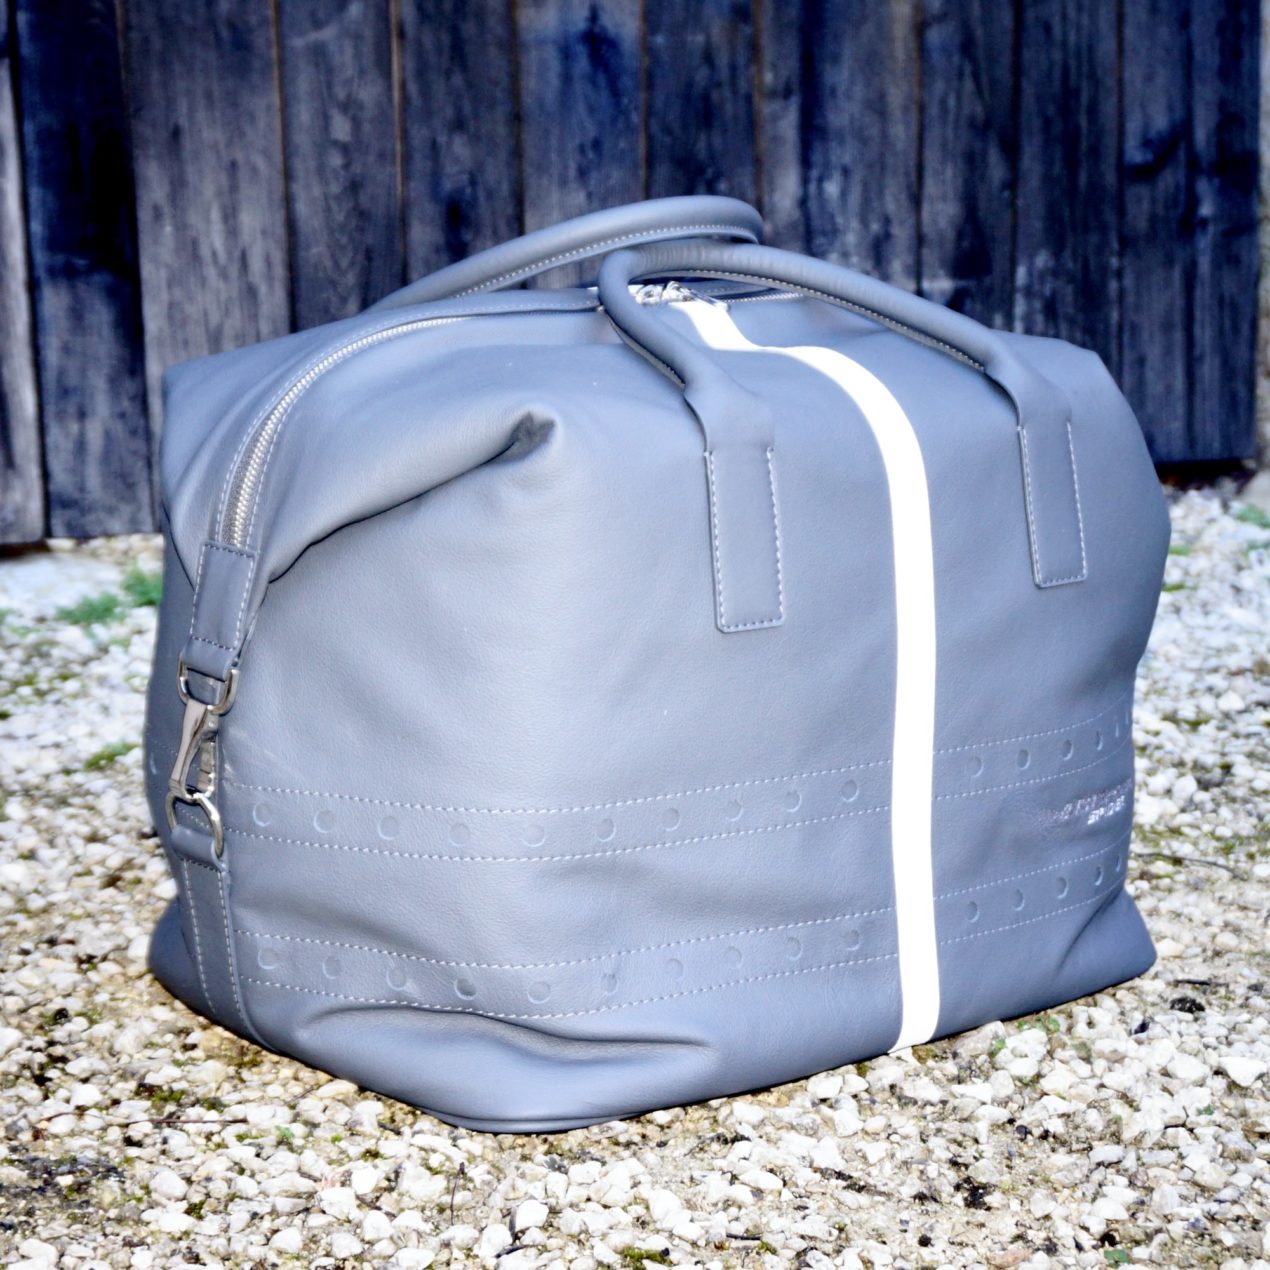 bag suitcase Made to measure bespoke fitted luggage Ferrari Daytona or Racing seats Schedoni